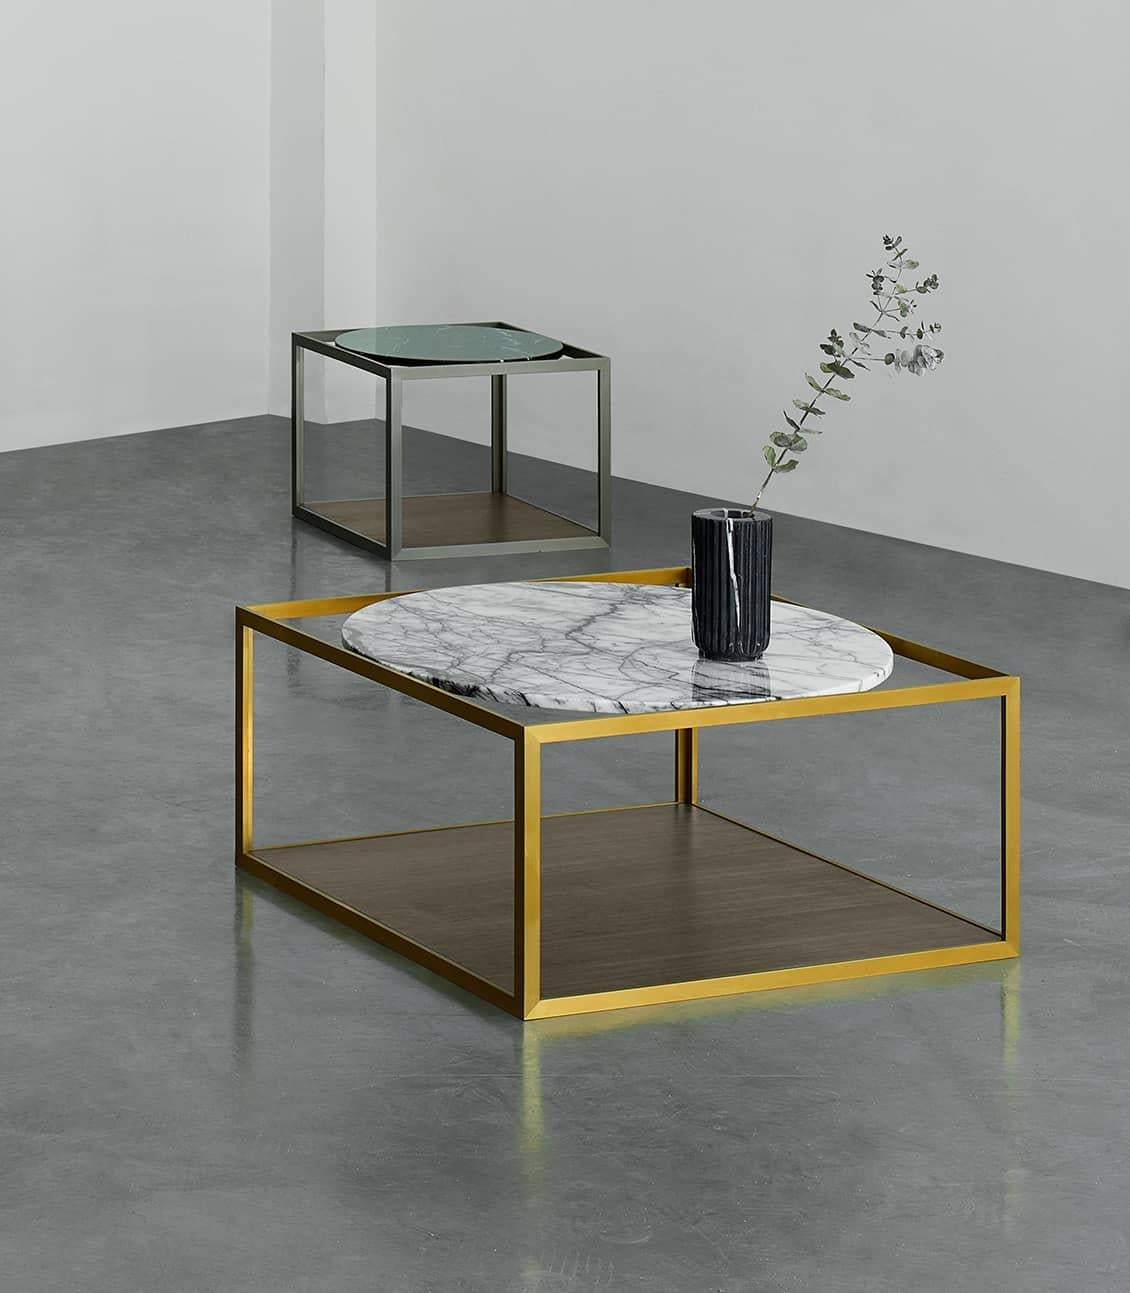 Metal NORDST GAARD Coffee Table, Italian White Mountain Marble, Danish Modern Design For Sale